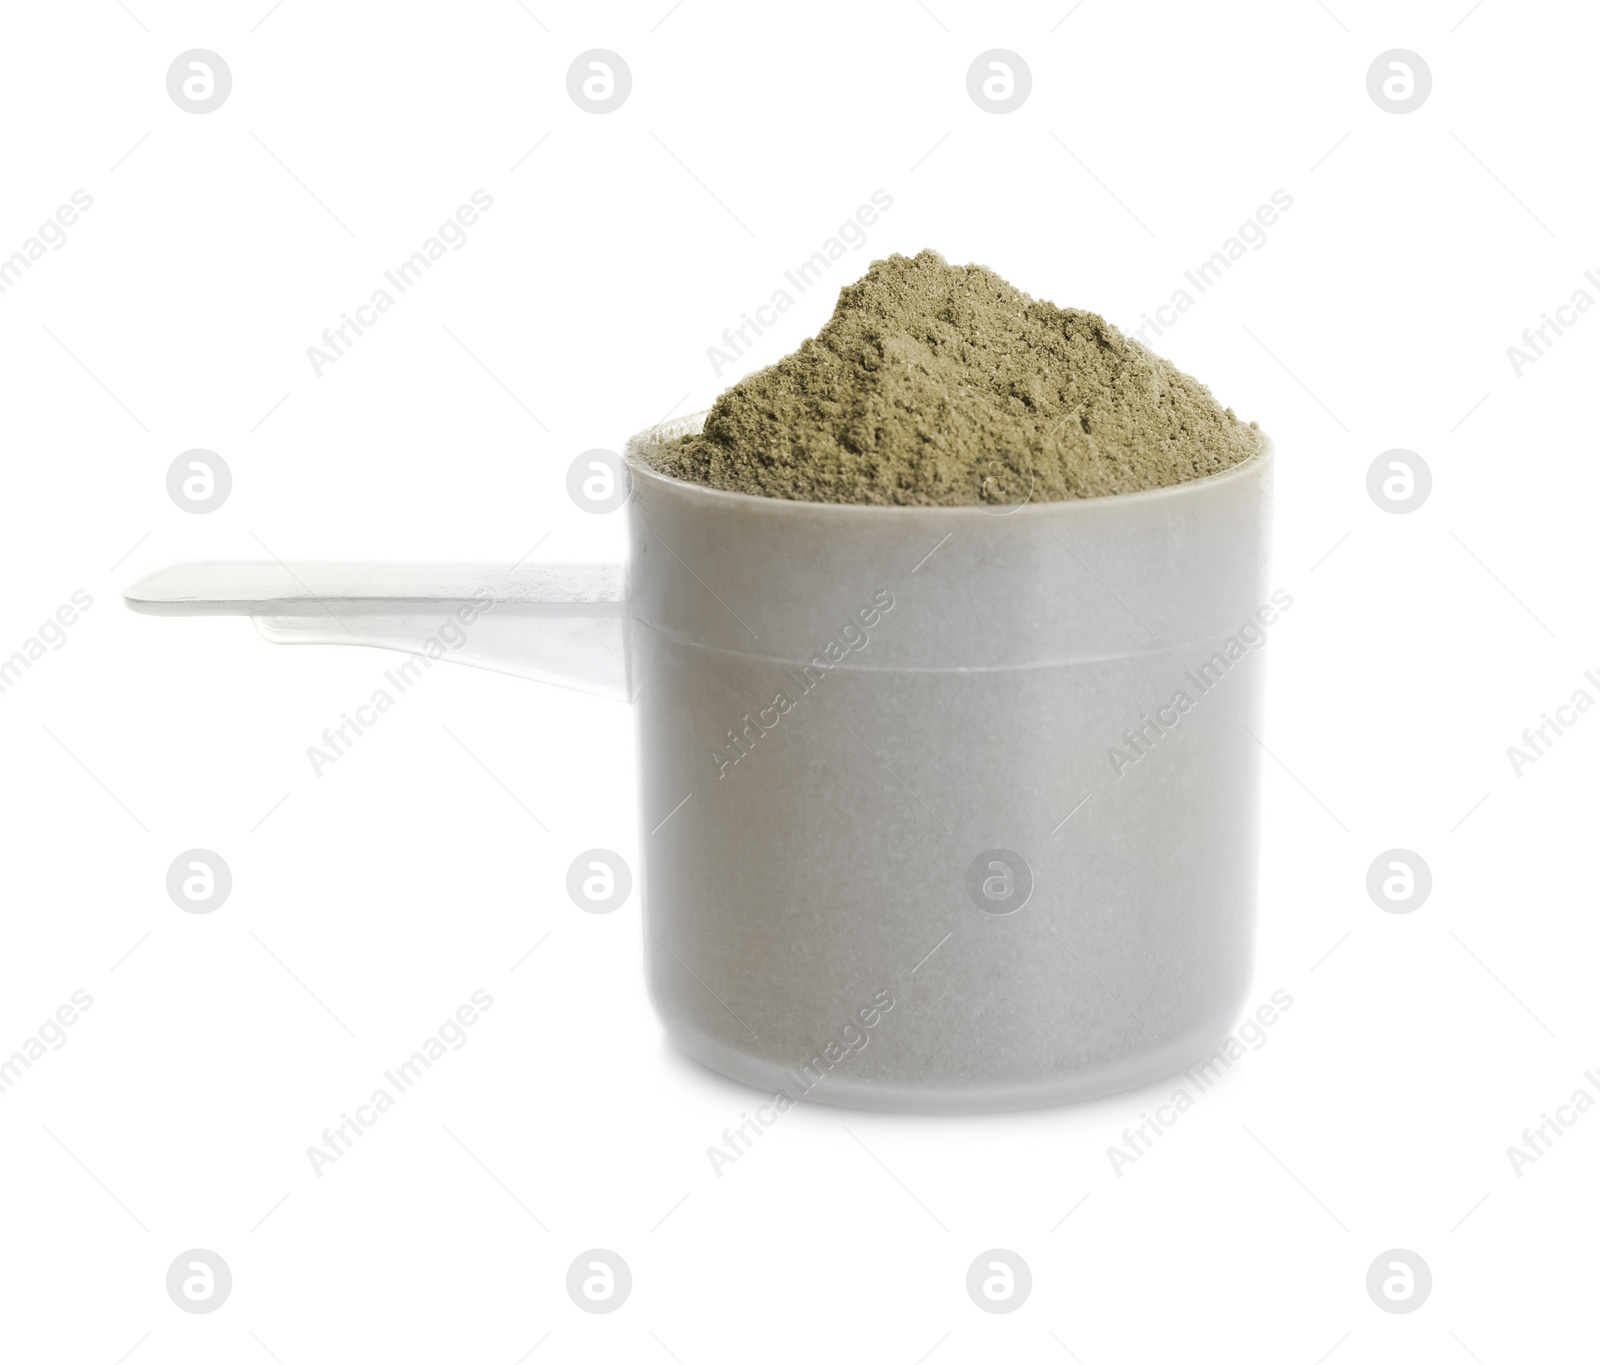 Photo of Scoop with hemp protein powder on white background